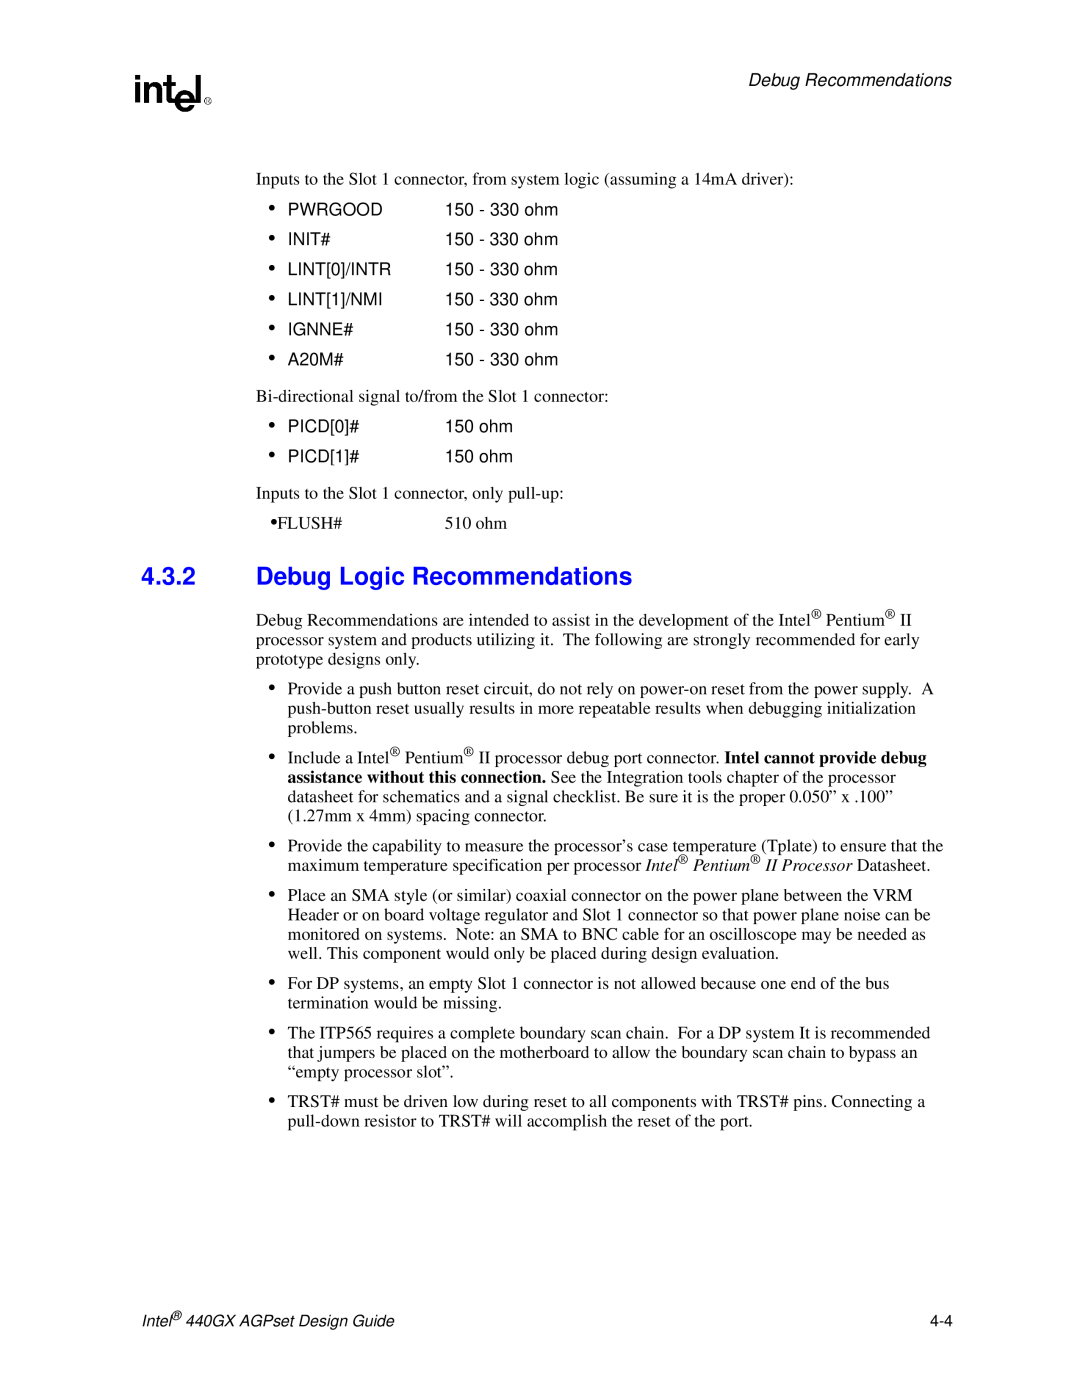 Intel 440GX manual Debug Logic Recommendations, Debug Recommendations 